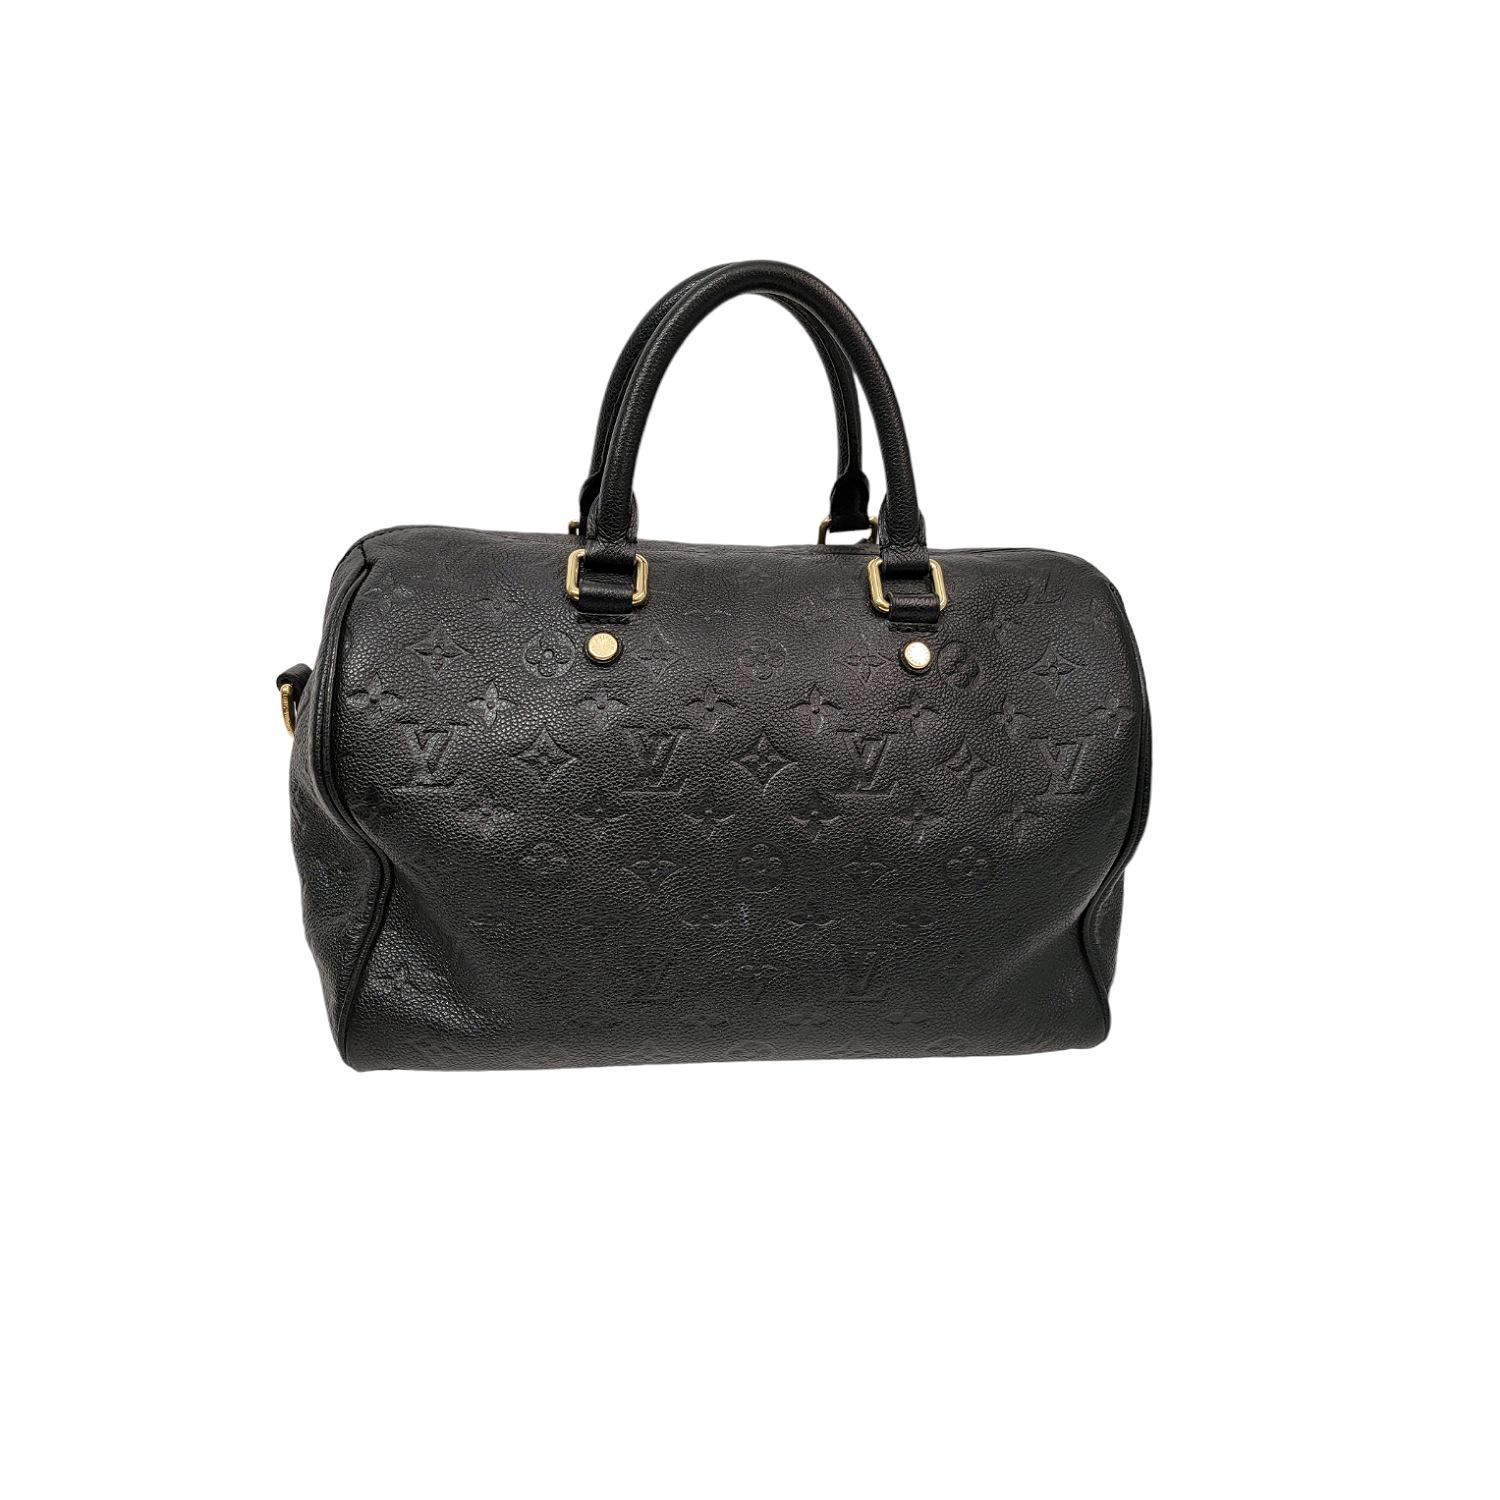 Louis Vuitton Monogram Empreinte Speedy Bandouliere 30 Bag In Good Condition For Sale In Scottsdale, AZ